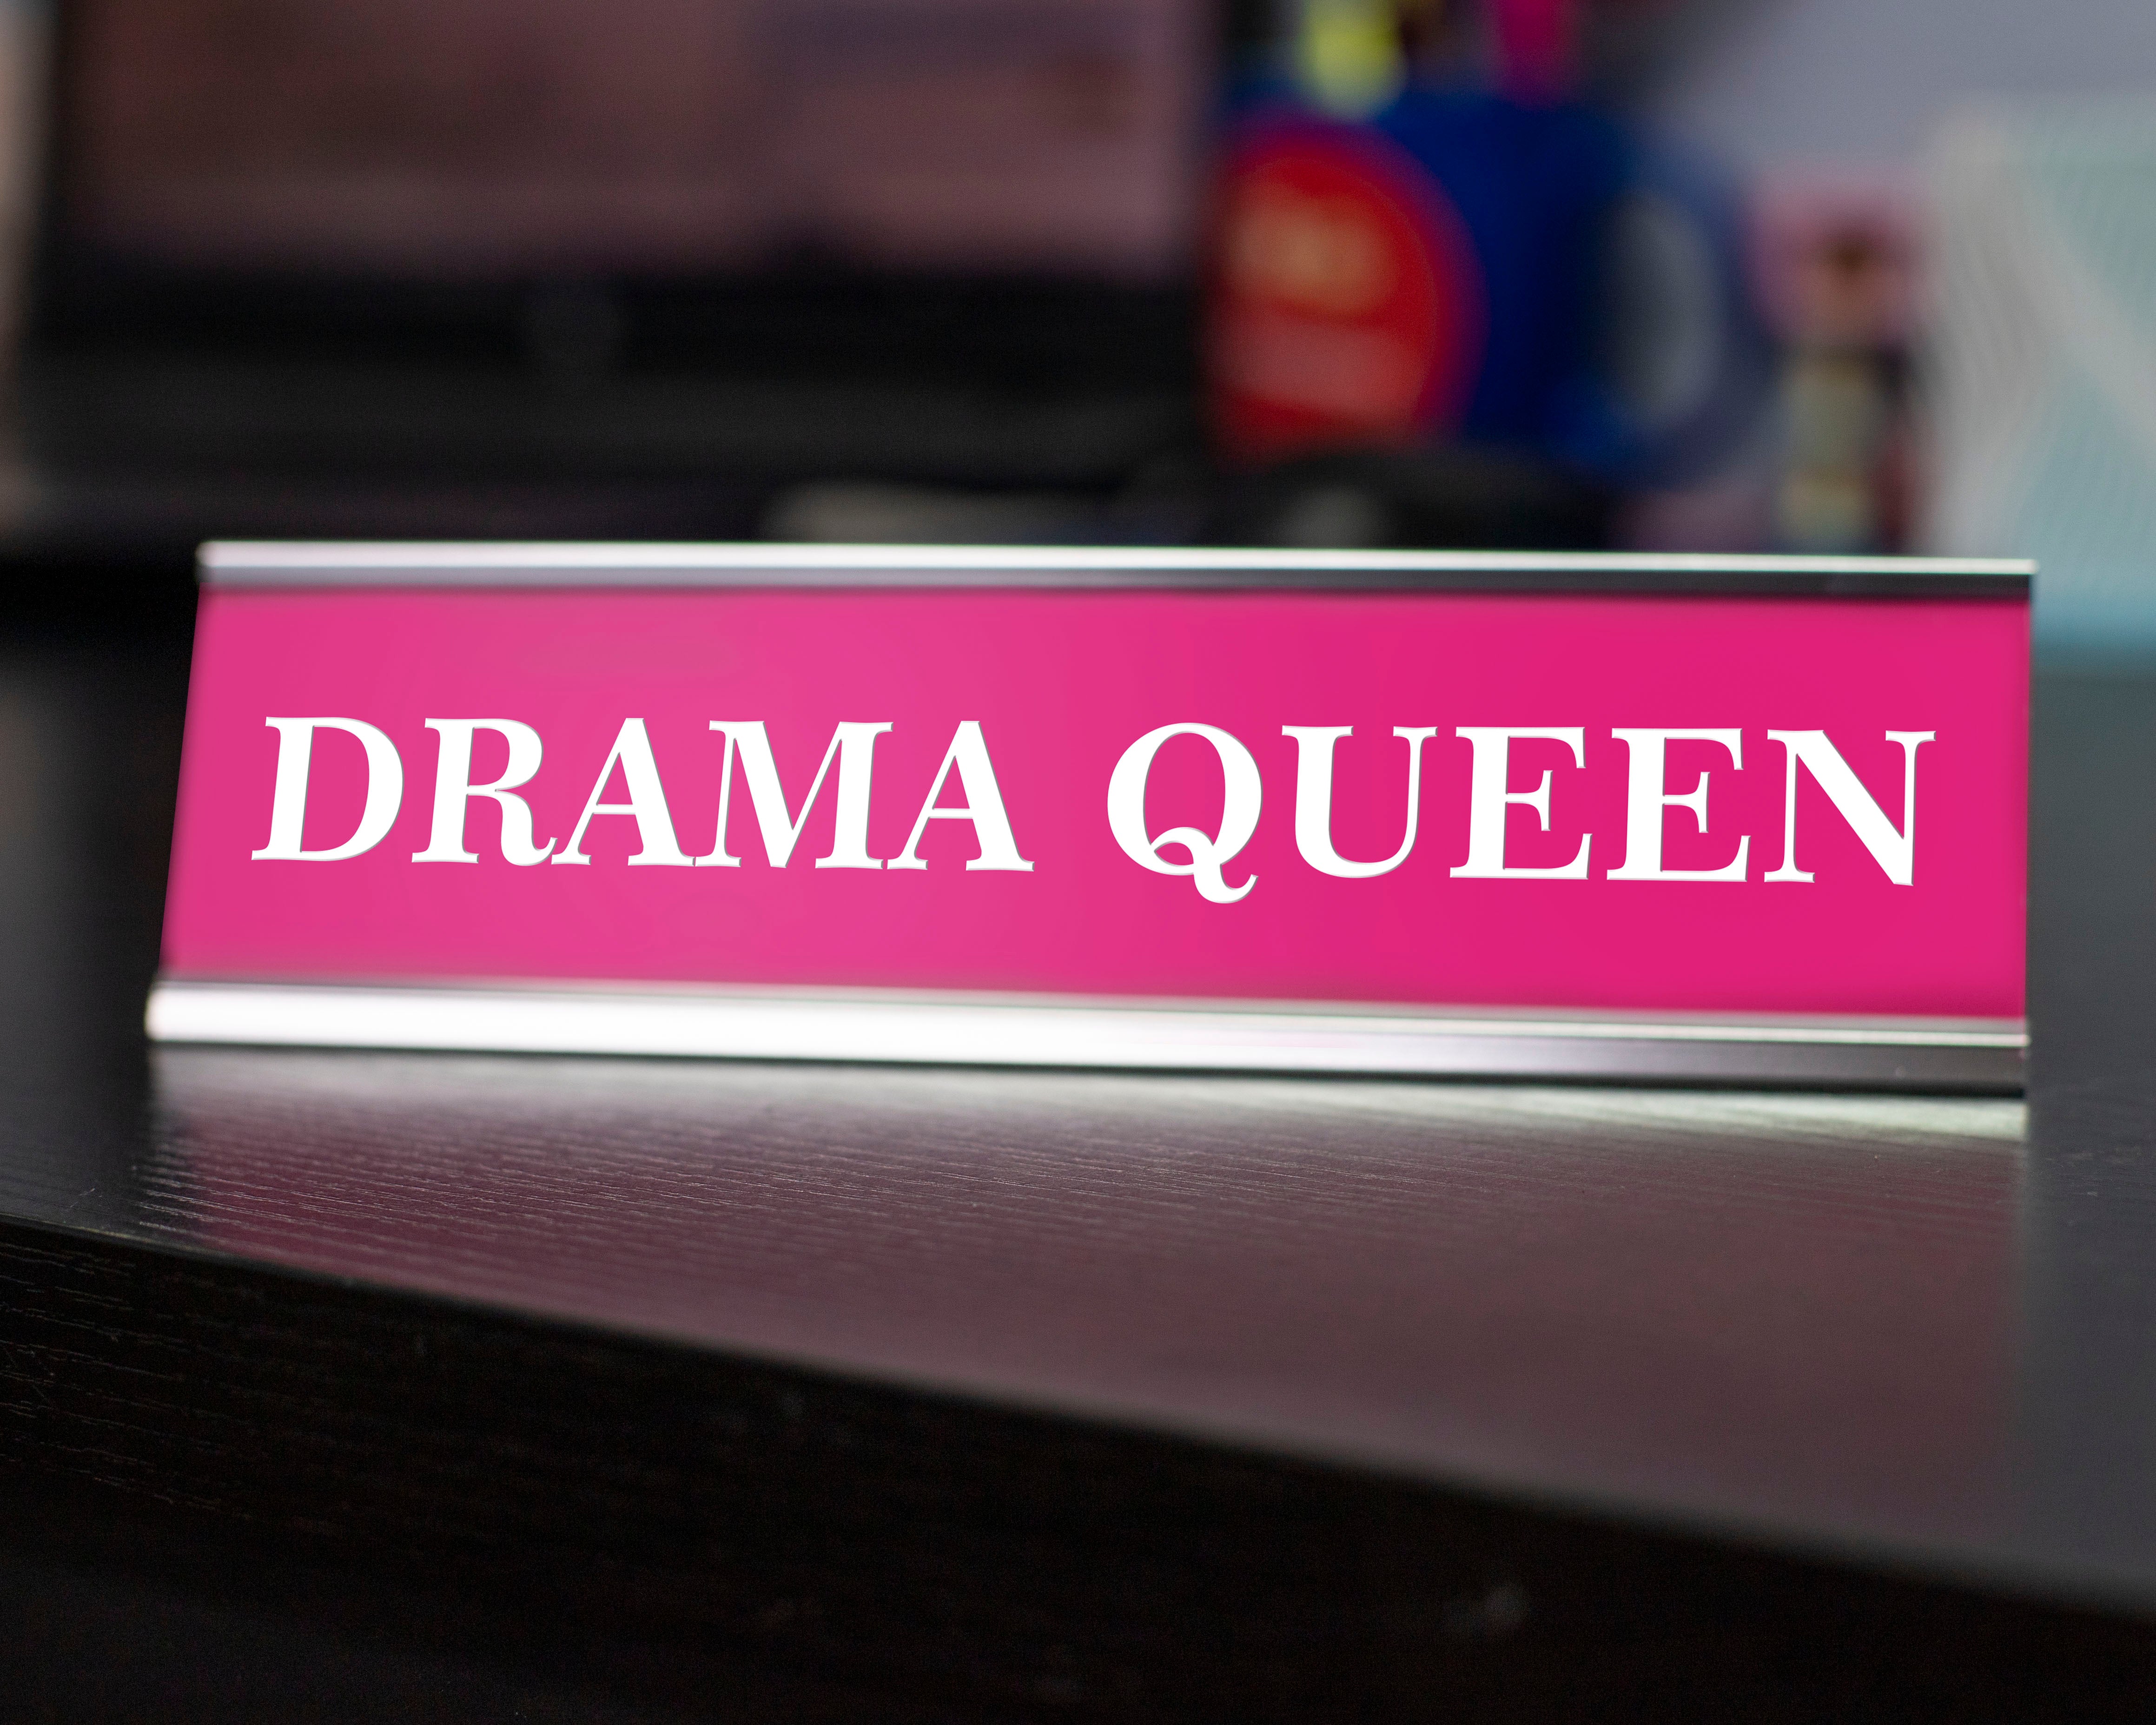 Drama Queen Novelty Desk Sign